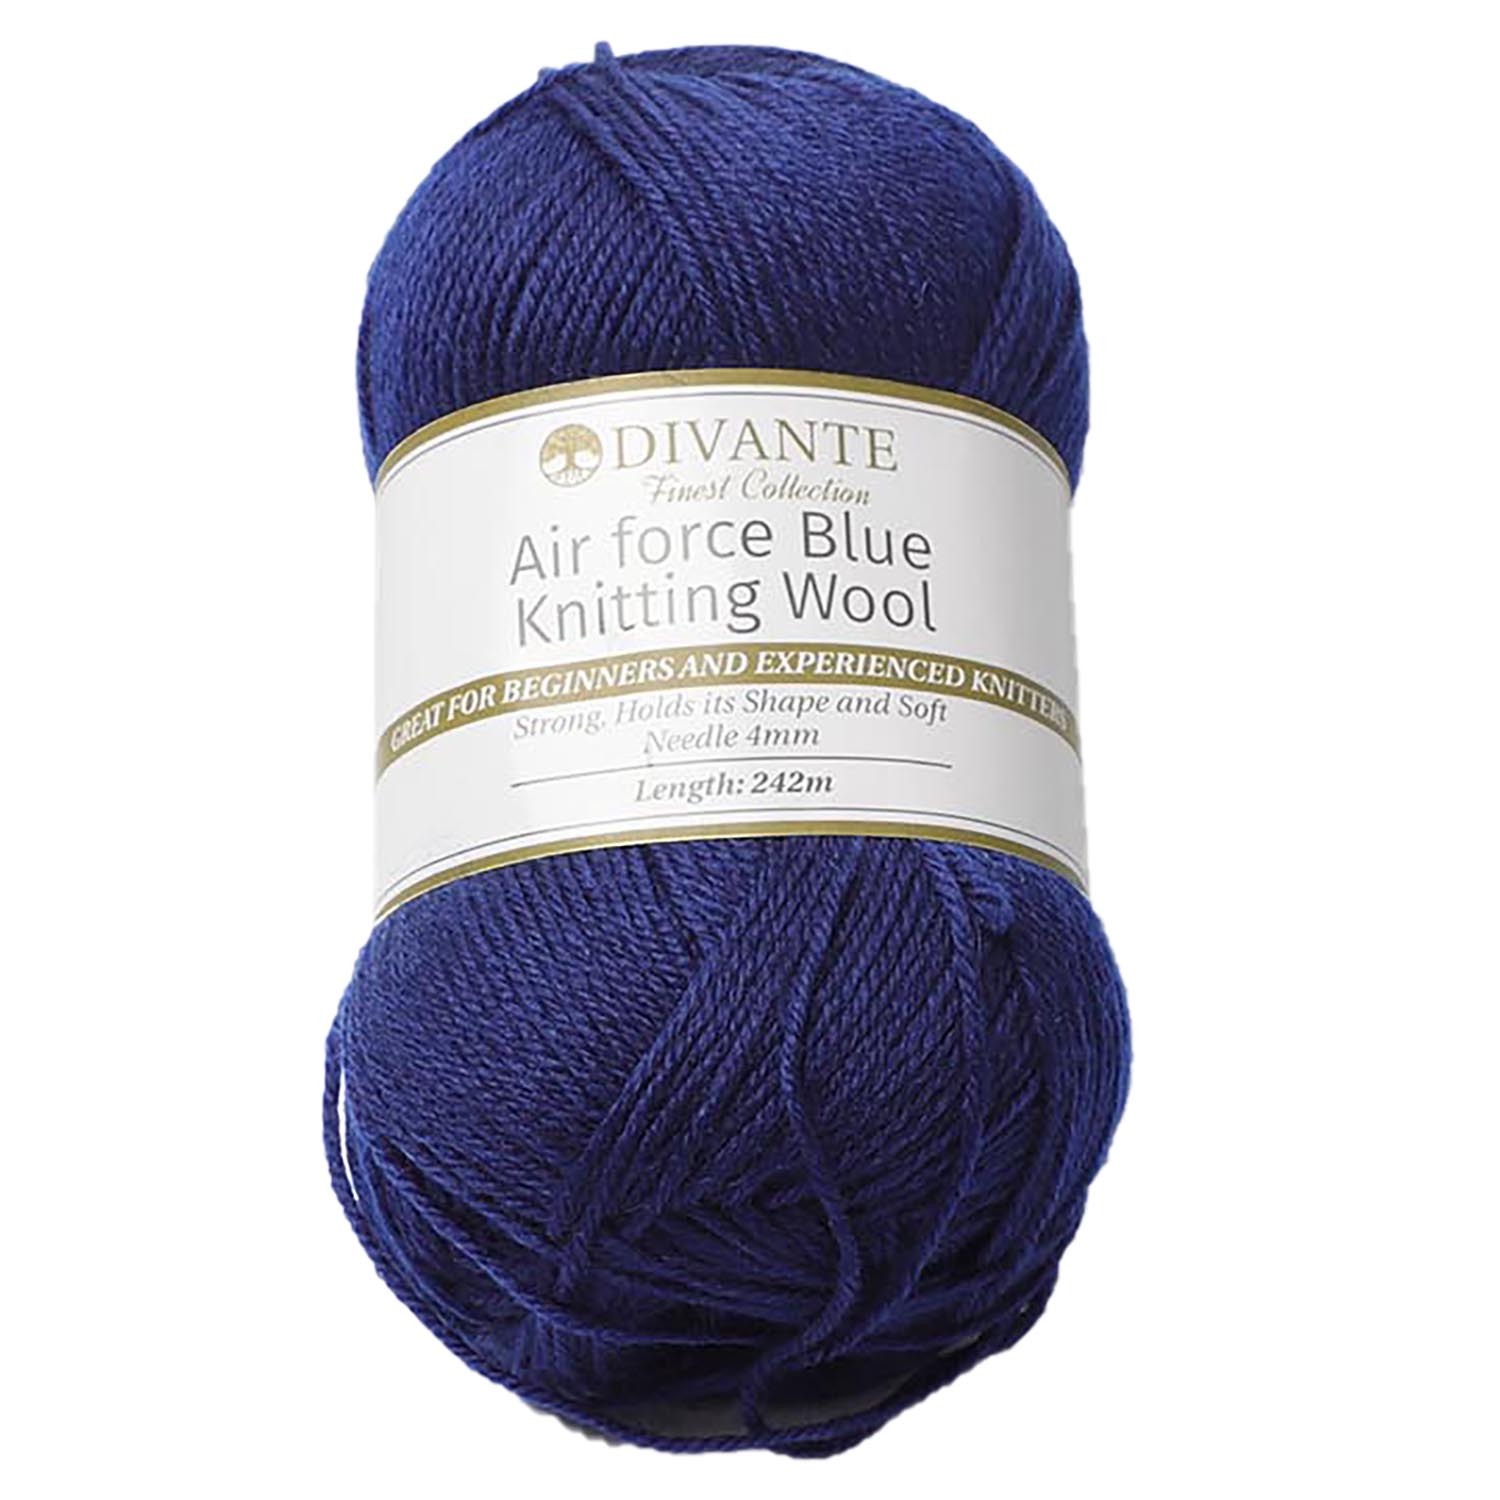 Divante Knitting Wool - Air Force Blue Image